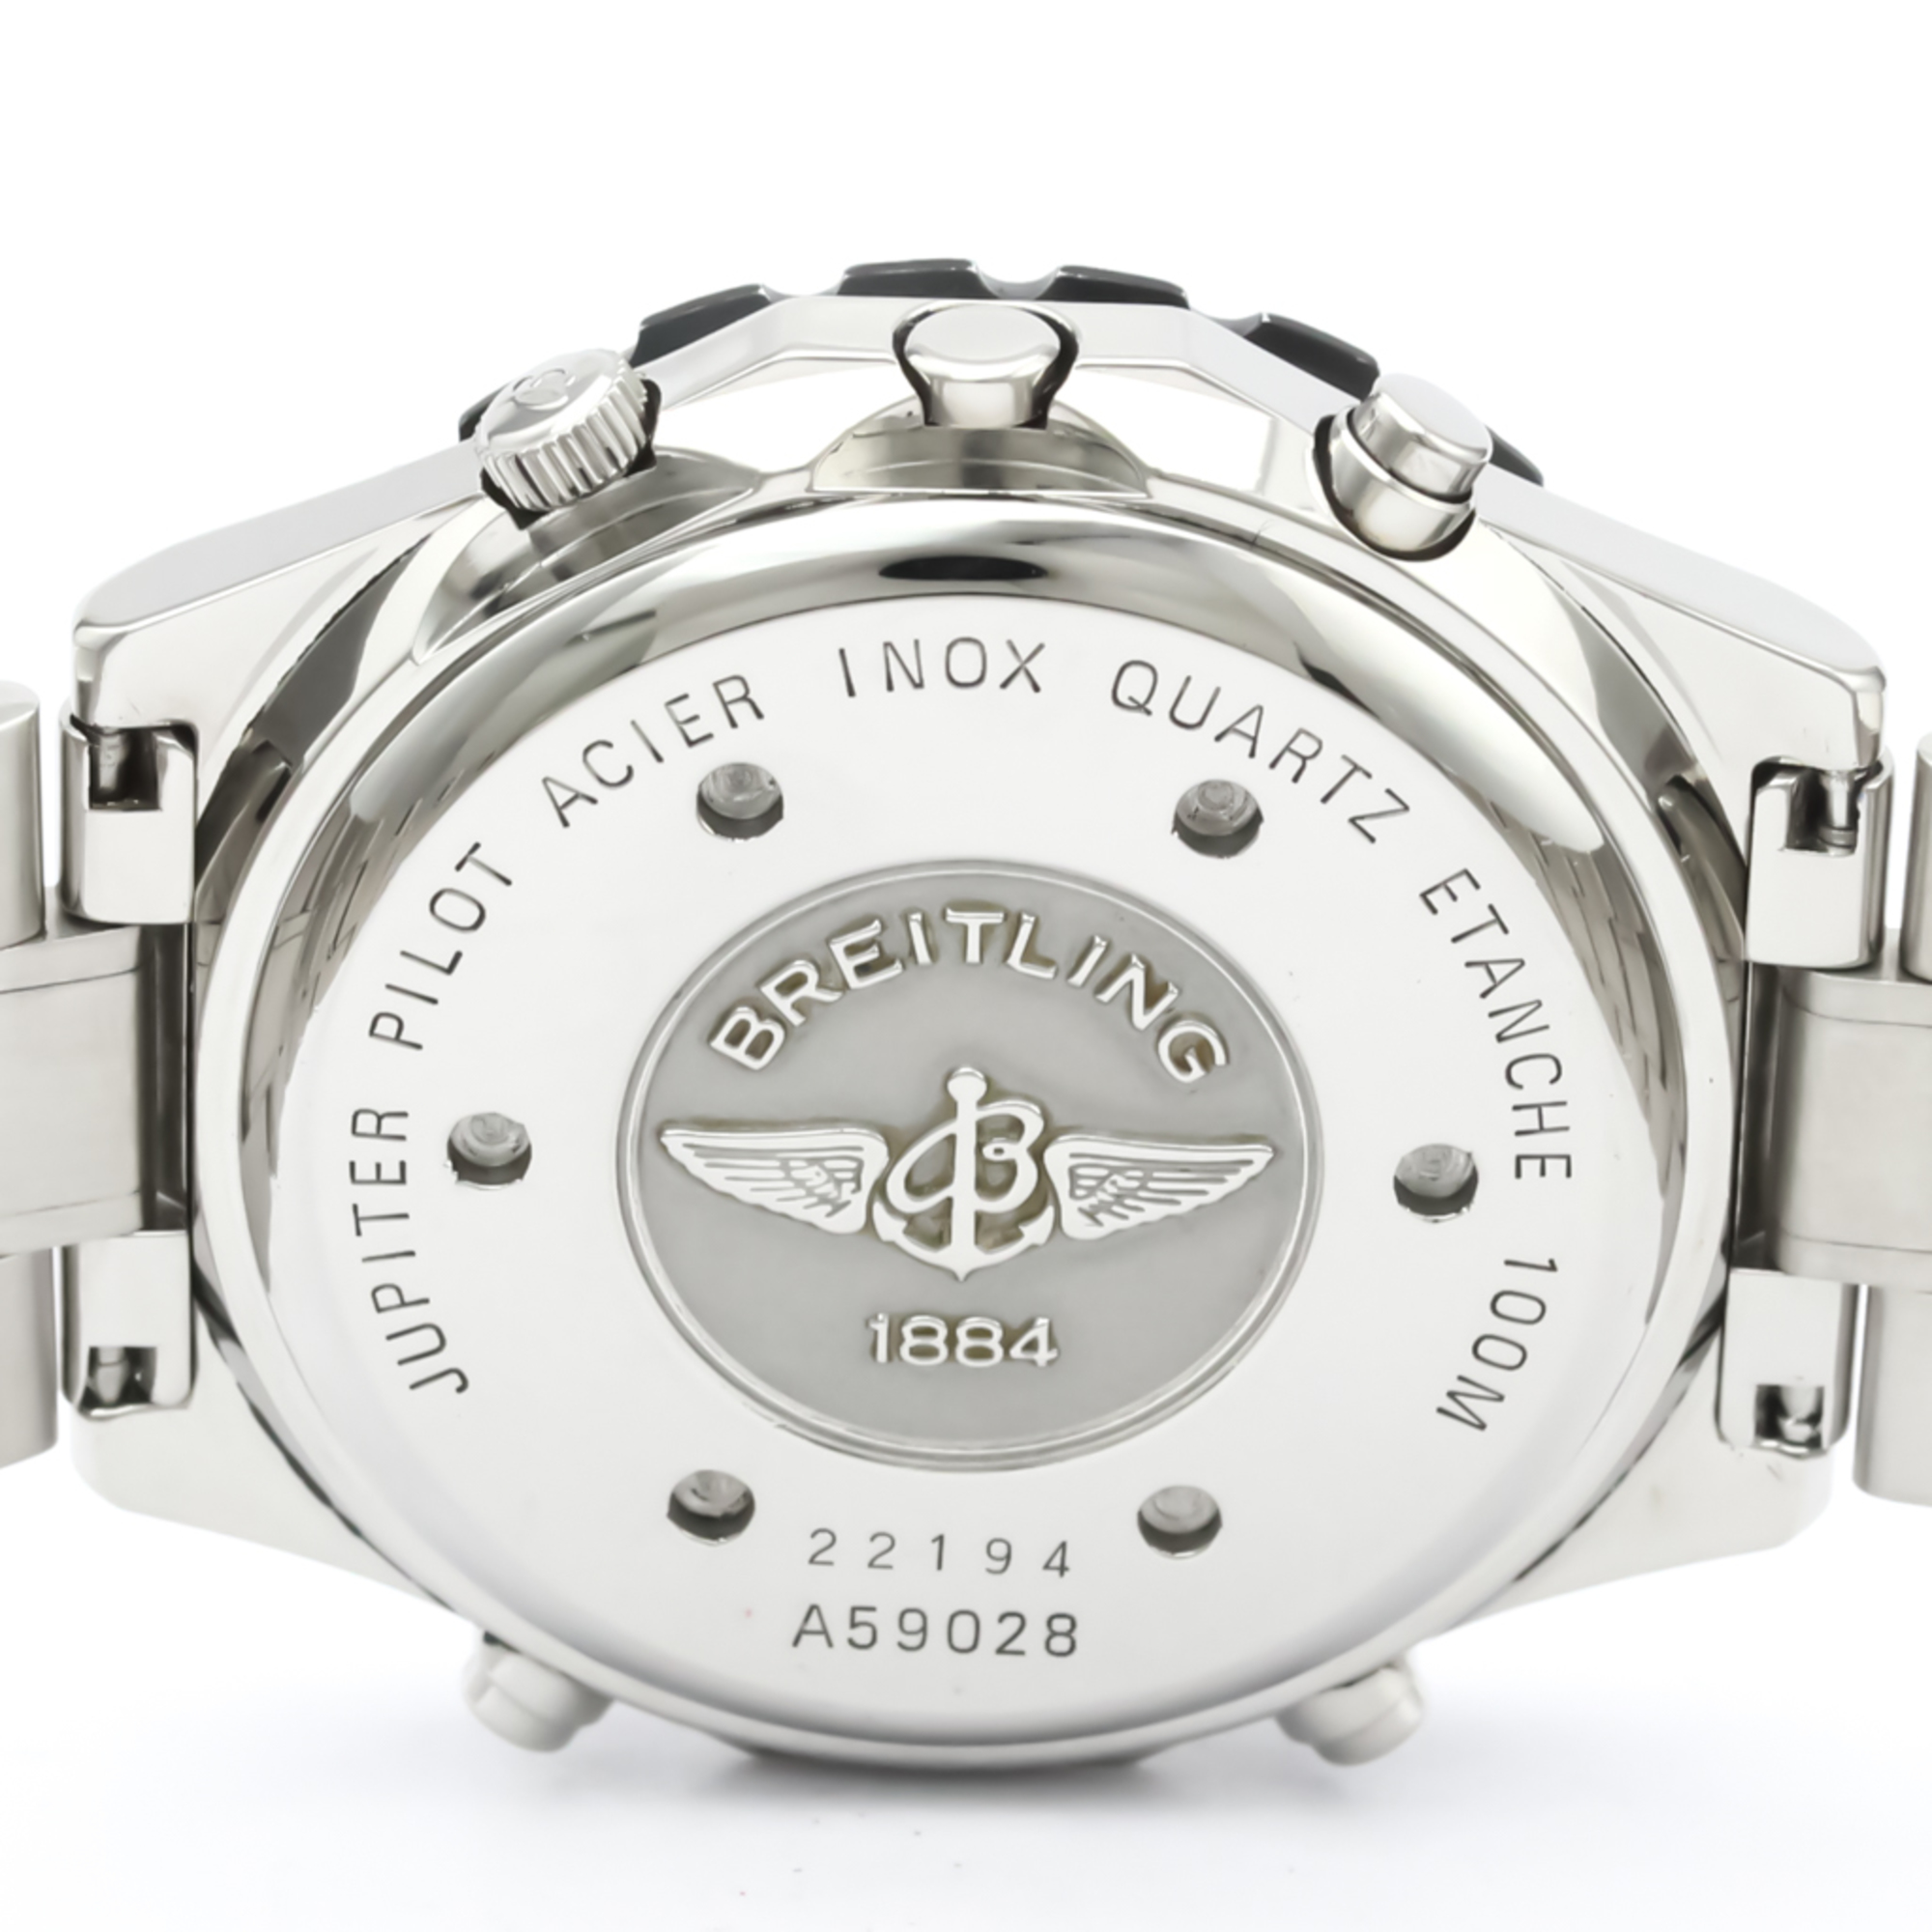 Breitling Jupiter Pilot Quartz Stainless Steel Men's Sports Watch A59028